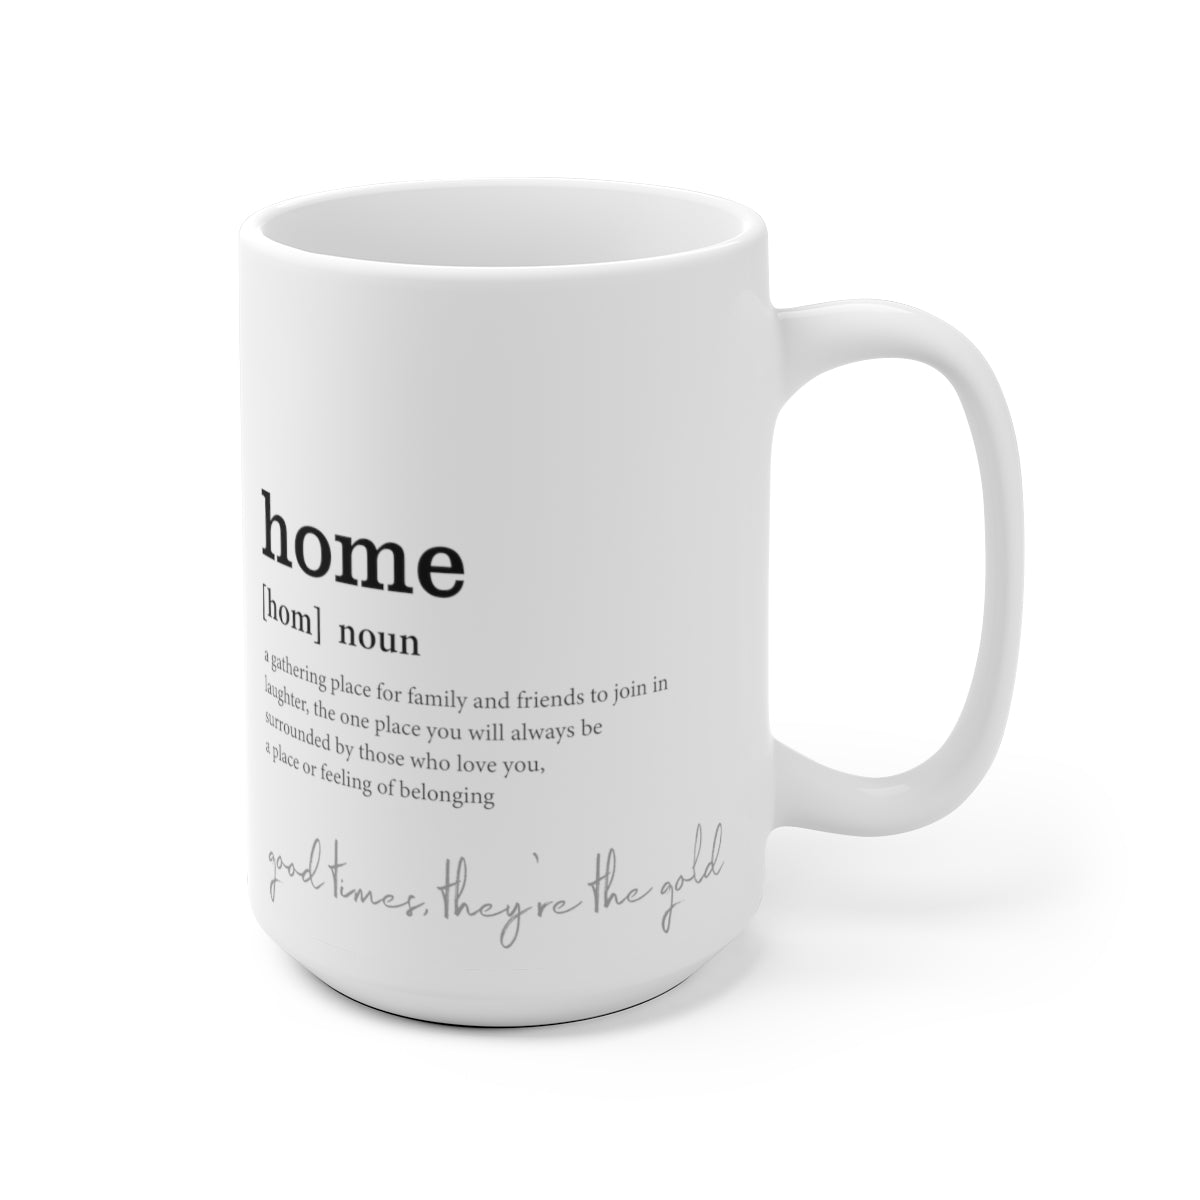 Home Definition double sided mug